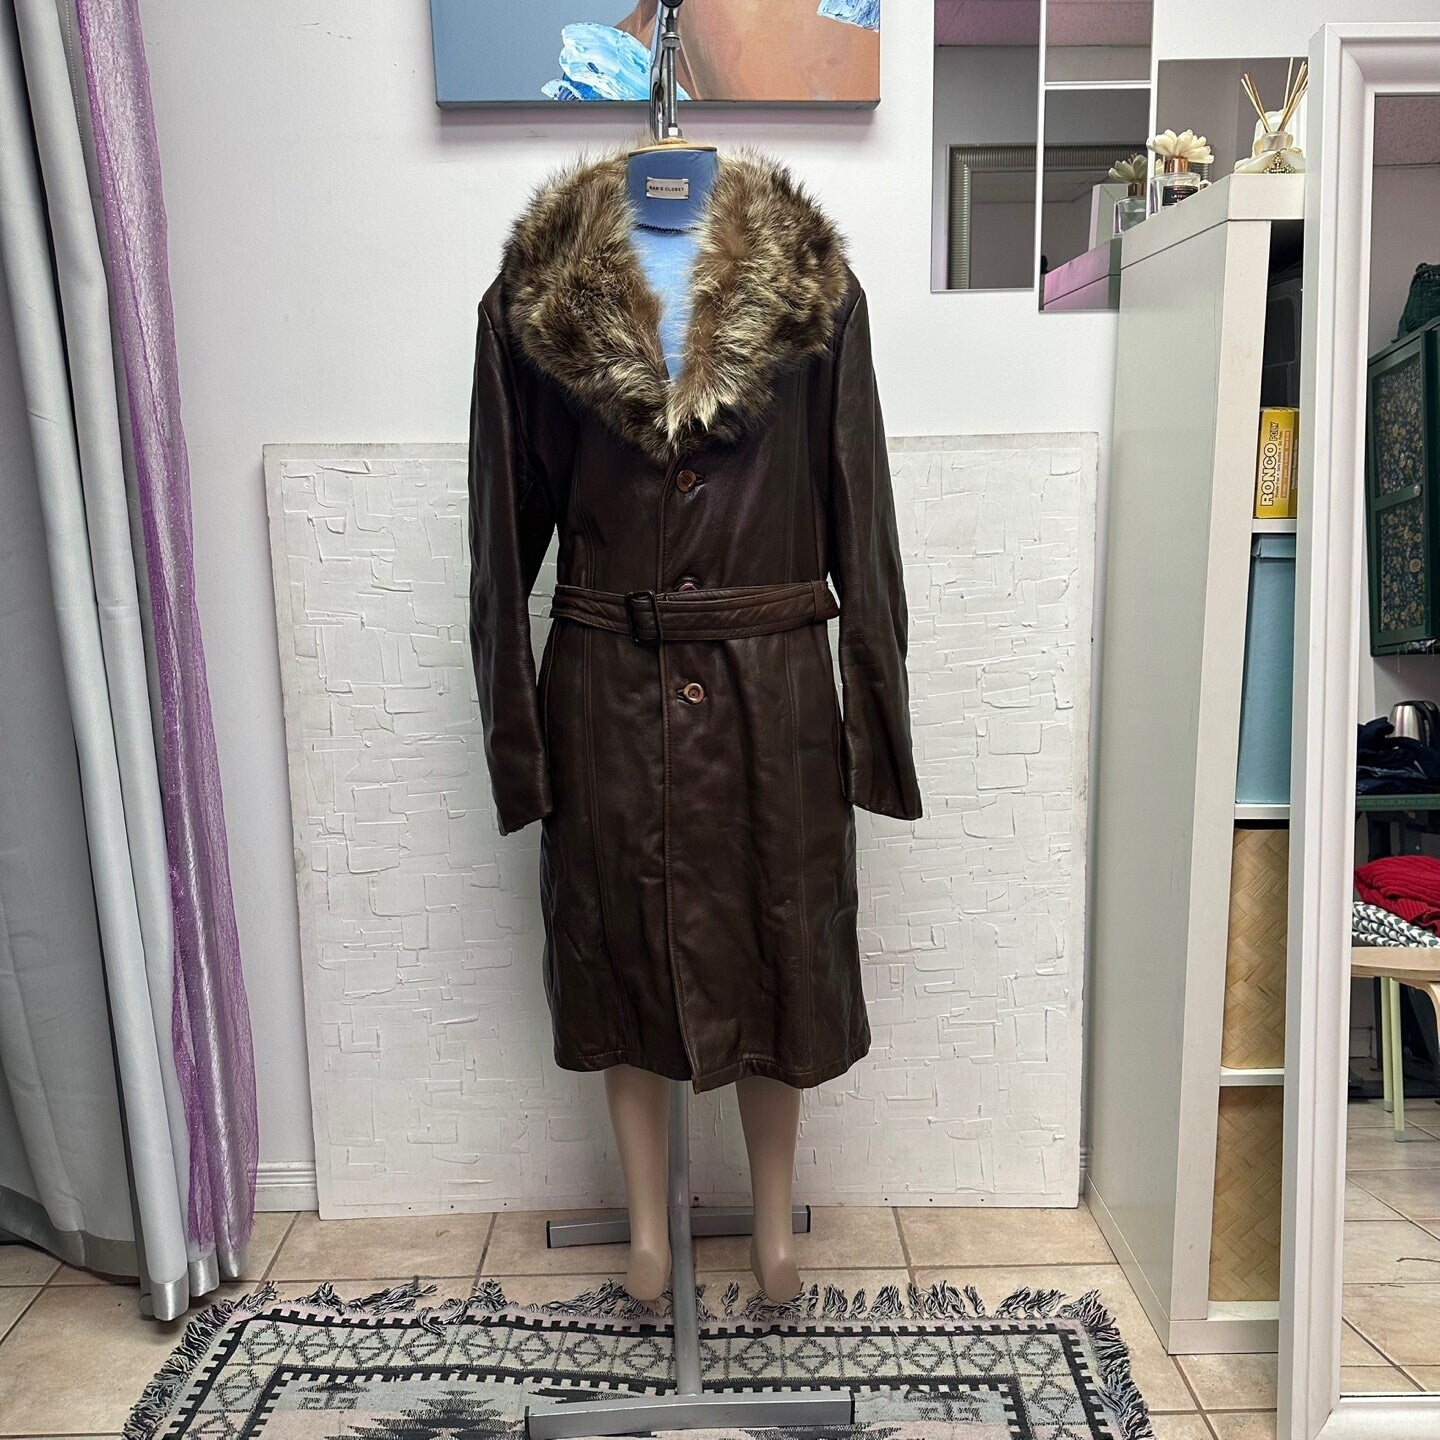 Vintage Leather Penny Lane Style Coat with Fur Collar Button up Closure and Belt | Vintage Coat | Afghan Coat | Size 44 | SKU ST-2002 |